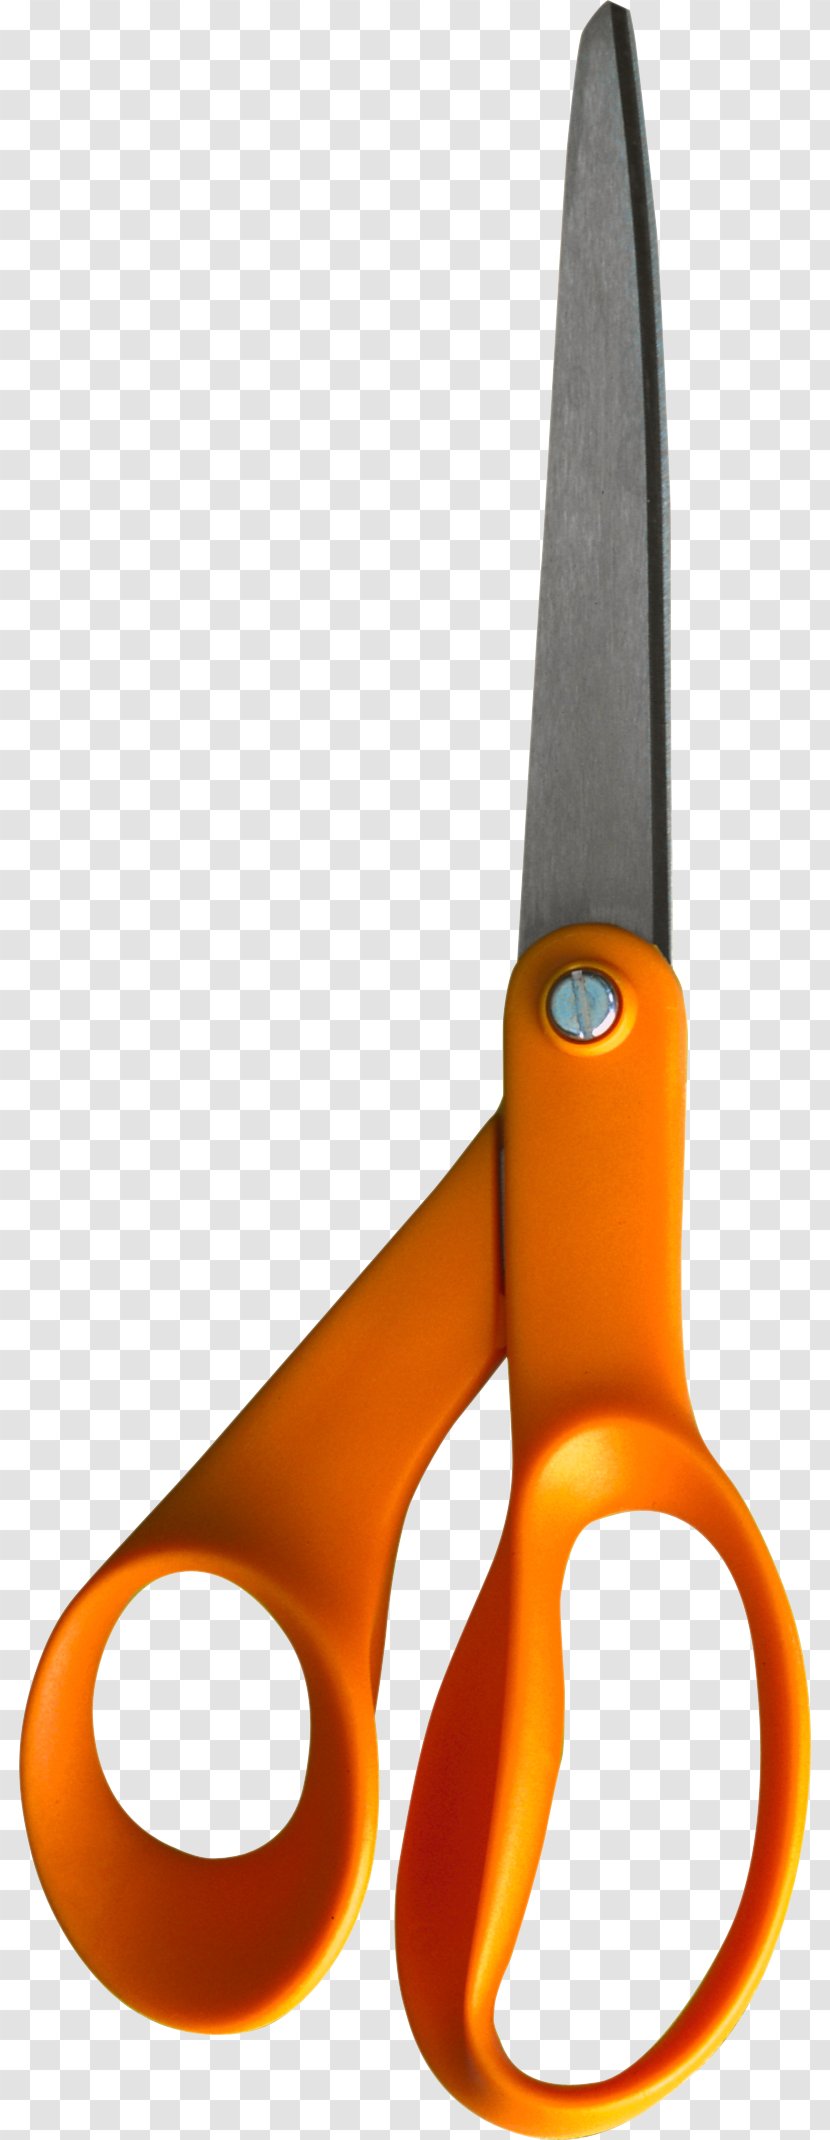 Scissors Download Clip Art - Digital Image - Orange Transparent PNG